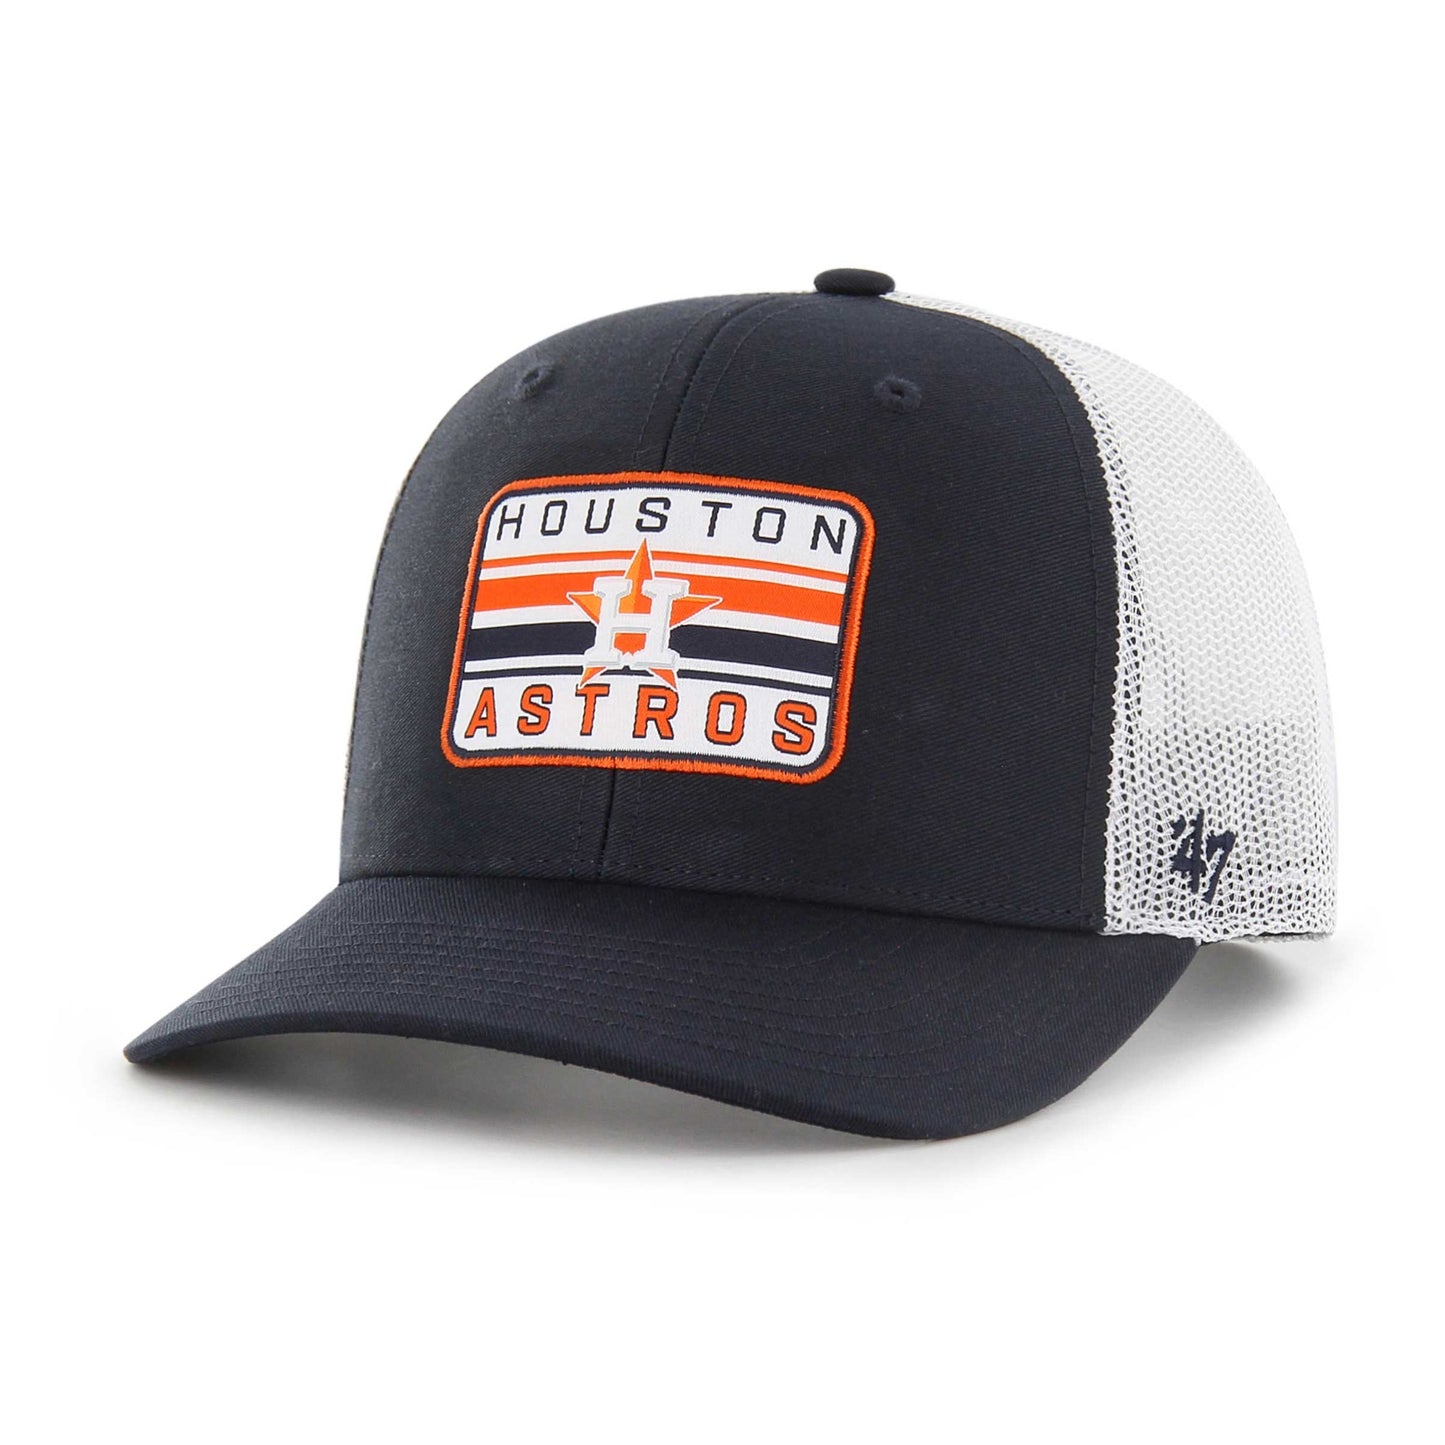 Houston Astros '47 Drifter Trucker Adjustable Hat - Navy